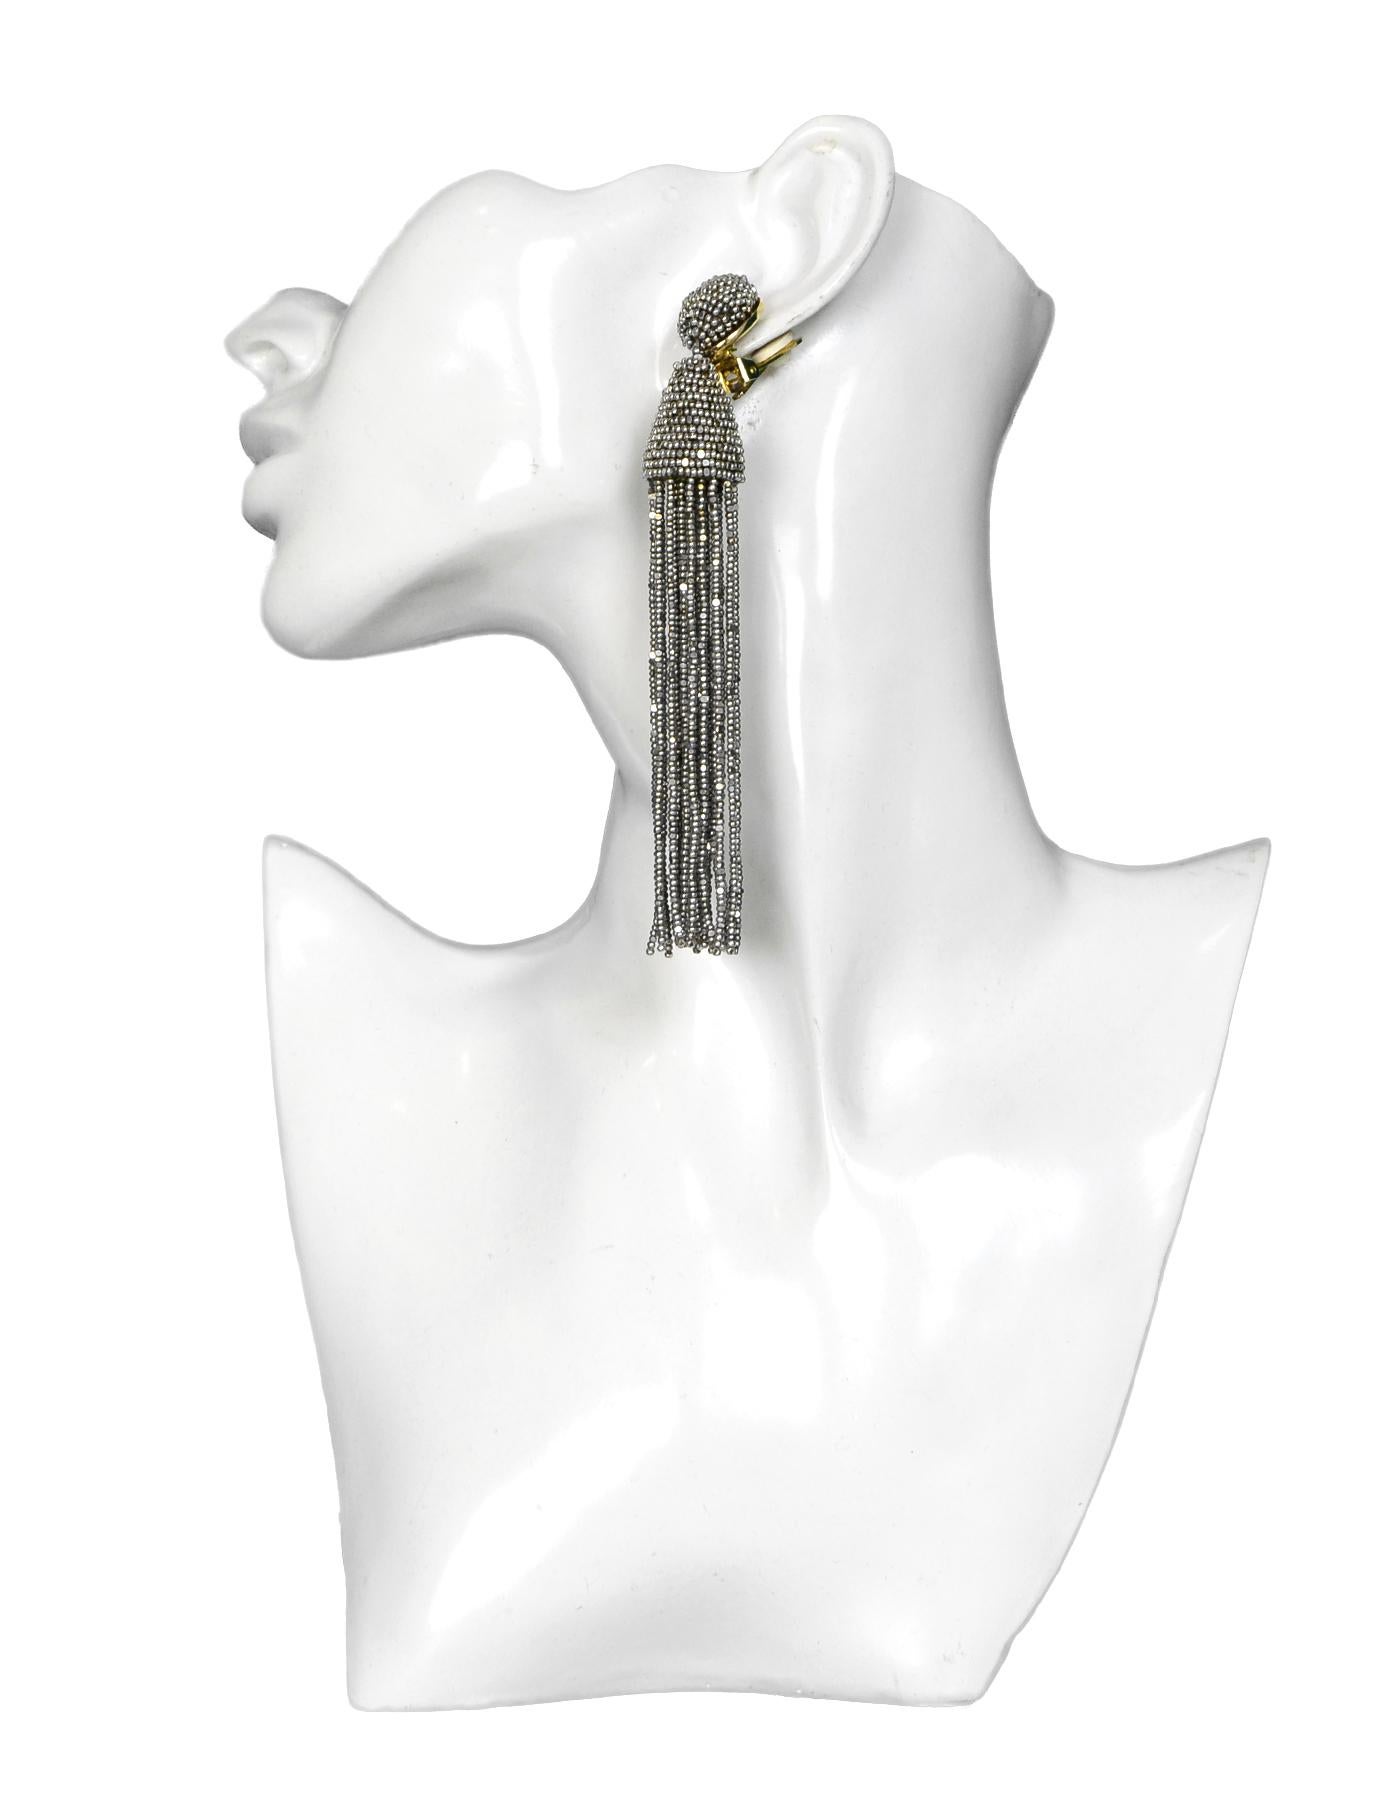 Oscar De La Renta Silvertone Tassel Clip-On Dangle Earrings

Color: Silvertone, goldtone
Materials: Silvertone metal
Hallmarks:   